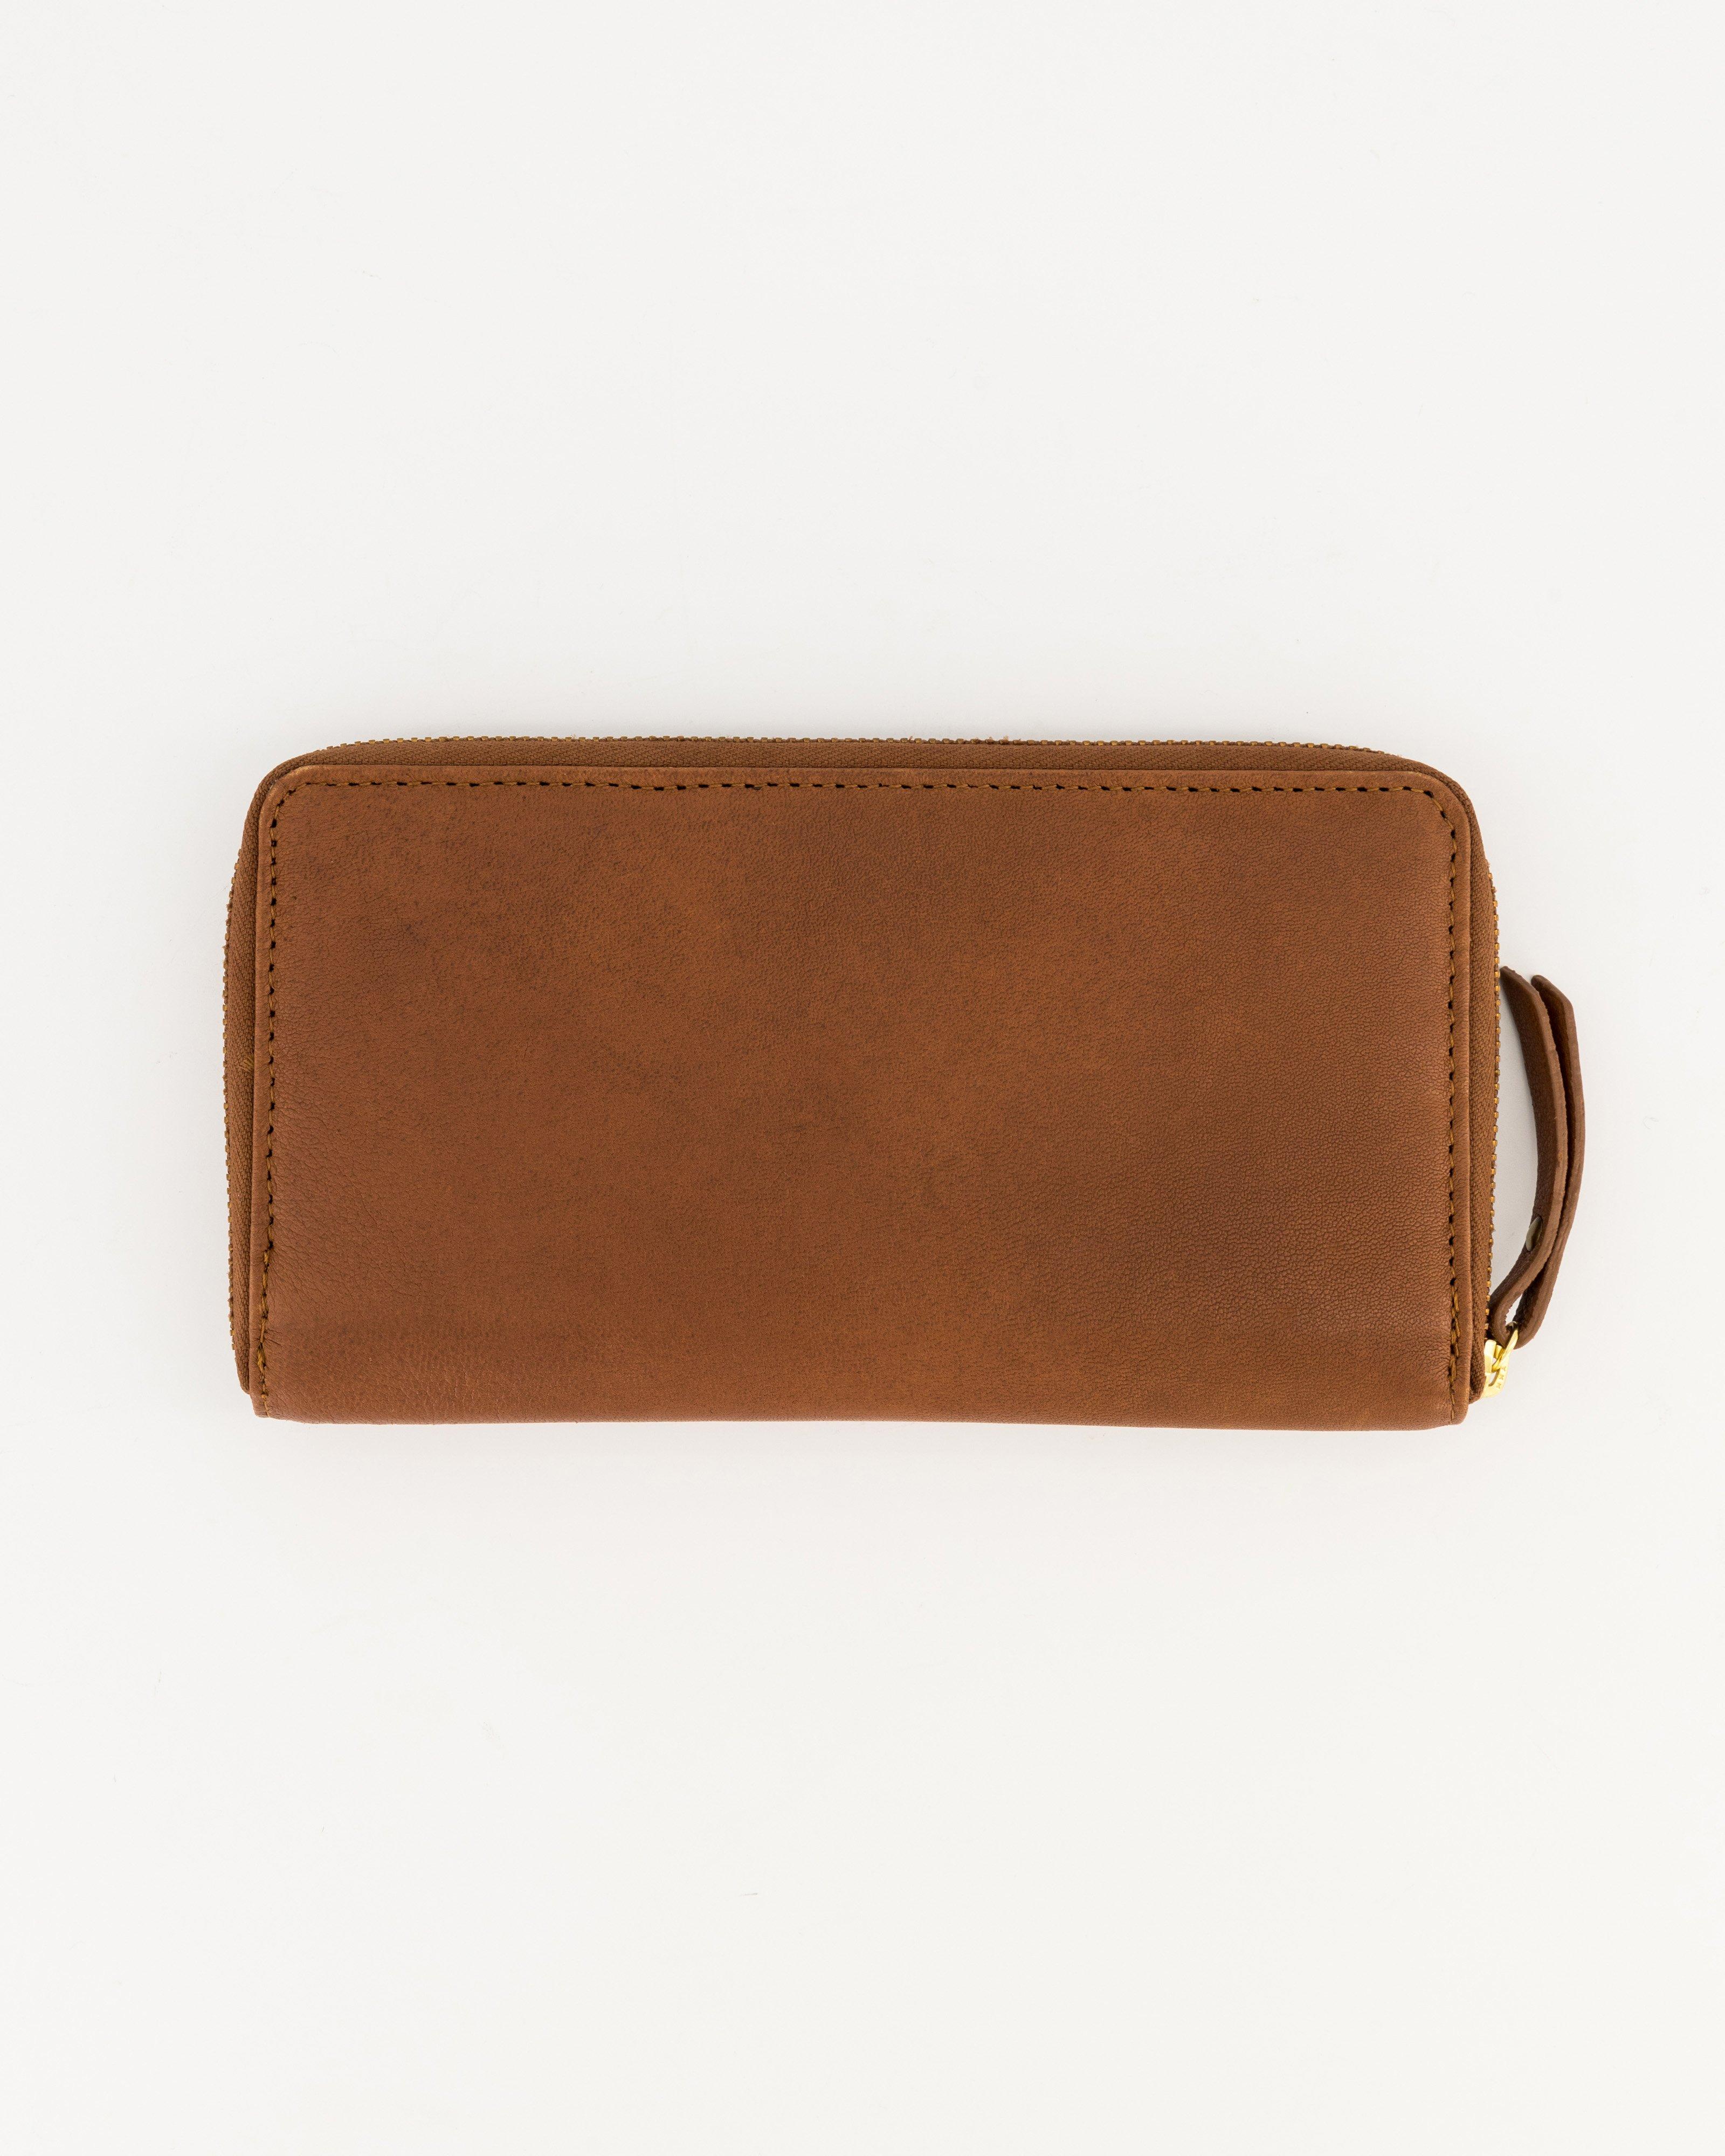 Heloise Pocket Wallet -  Tan